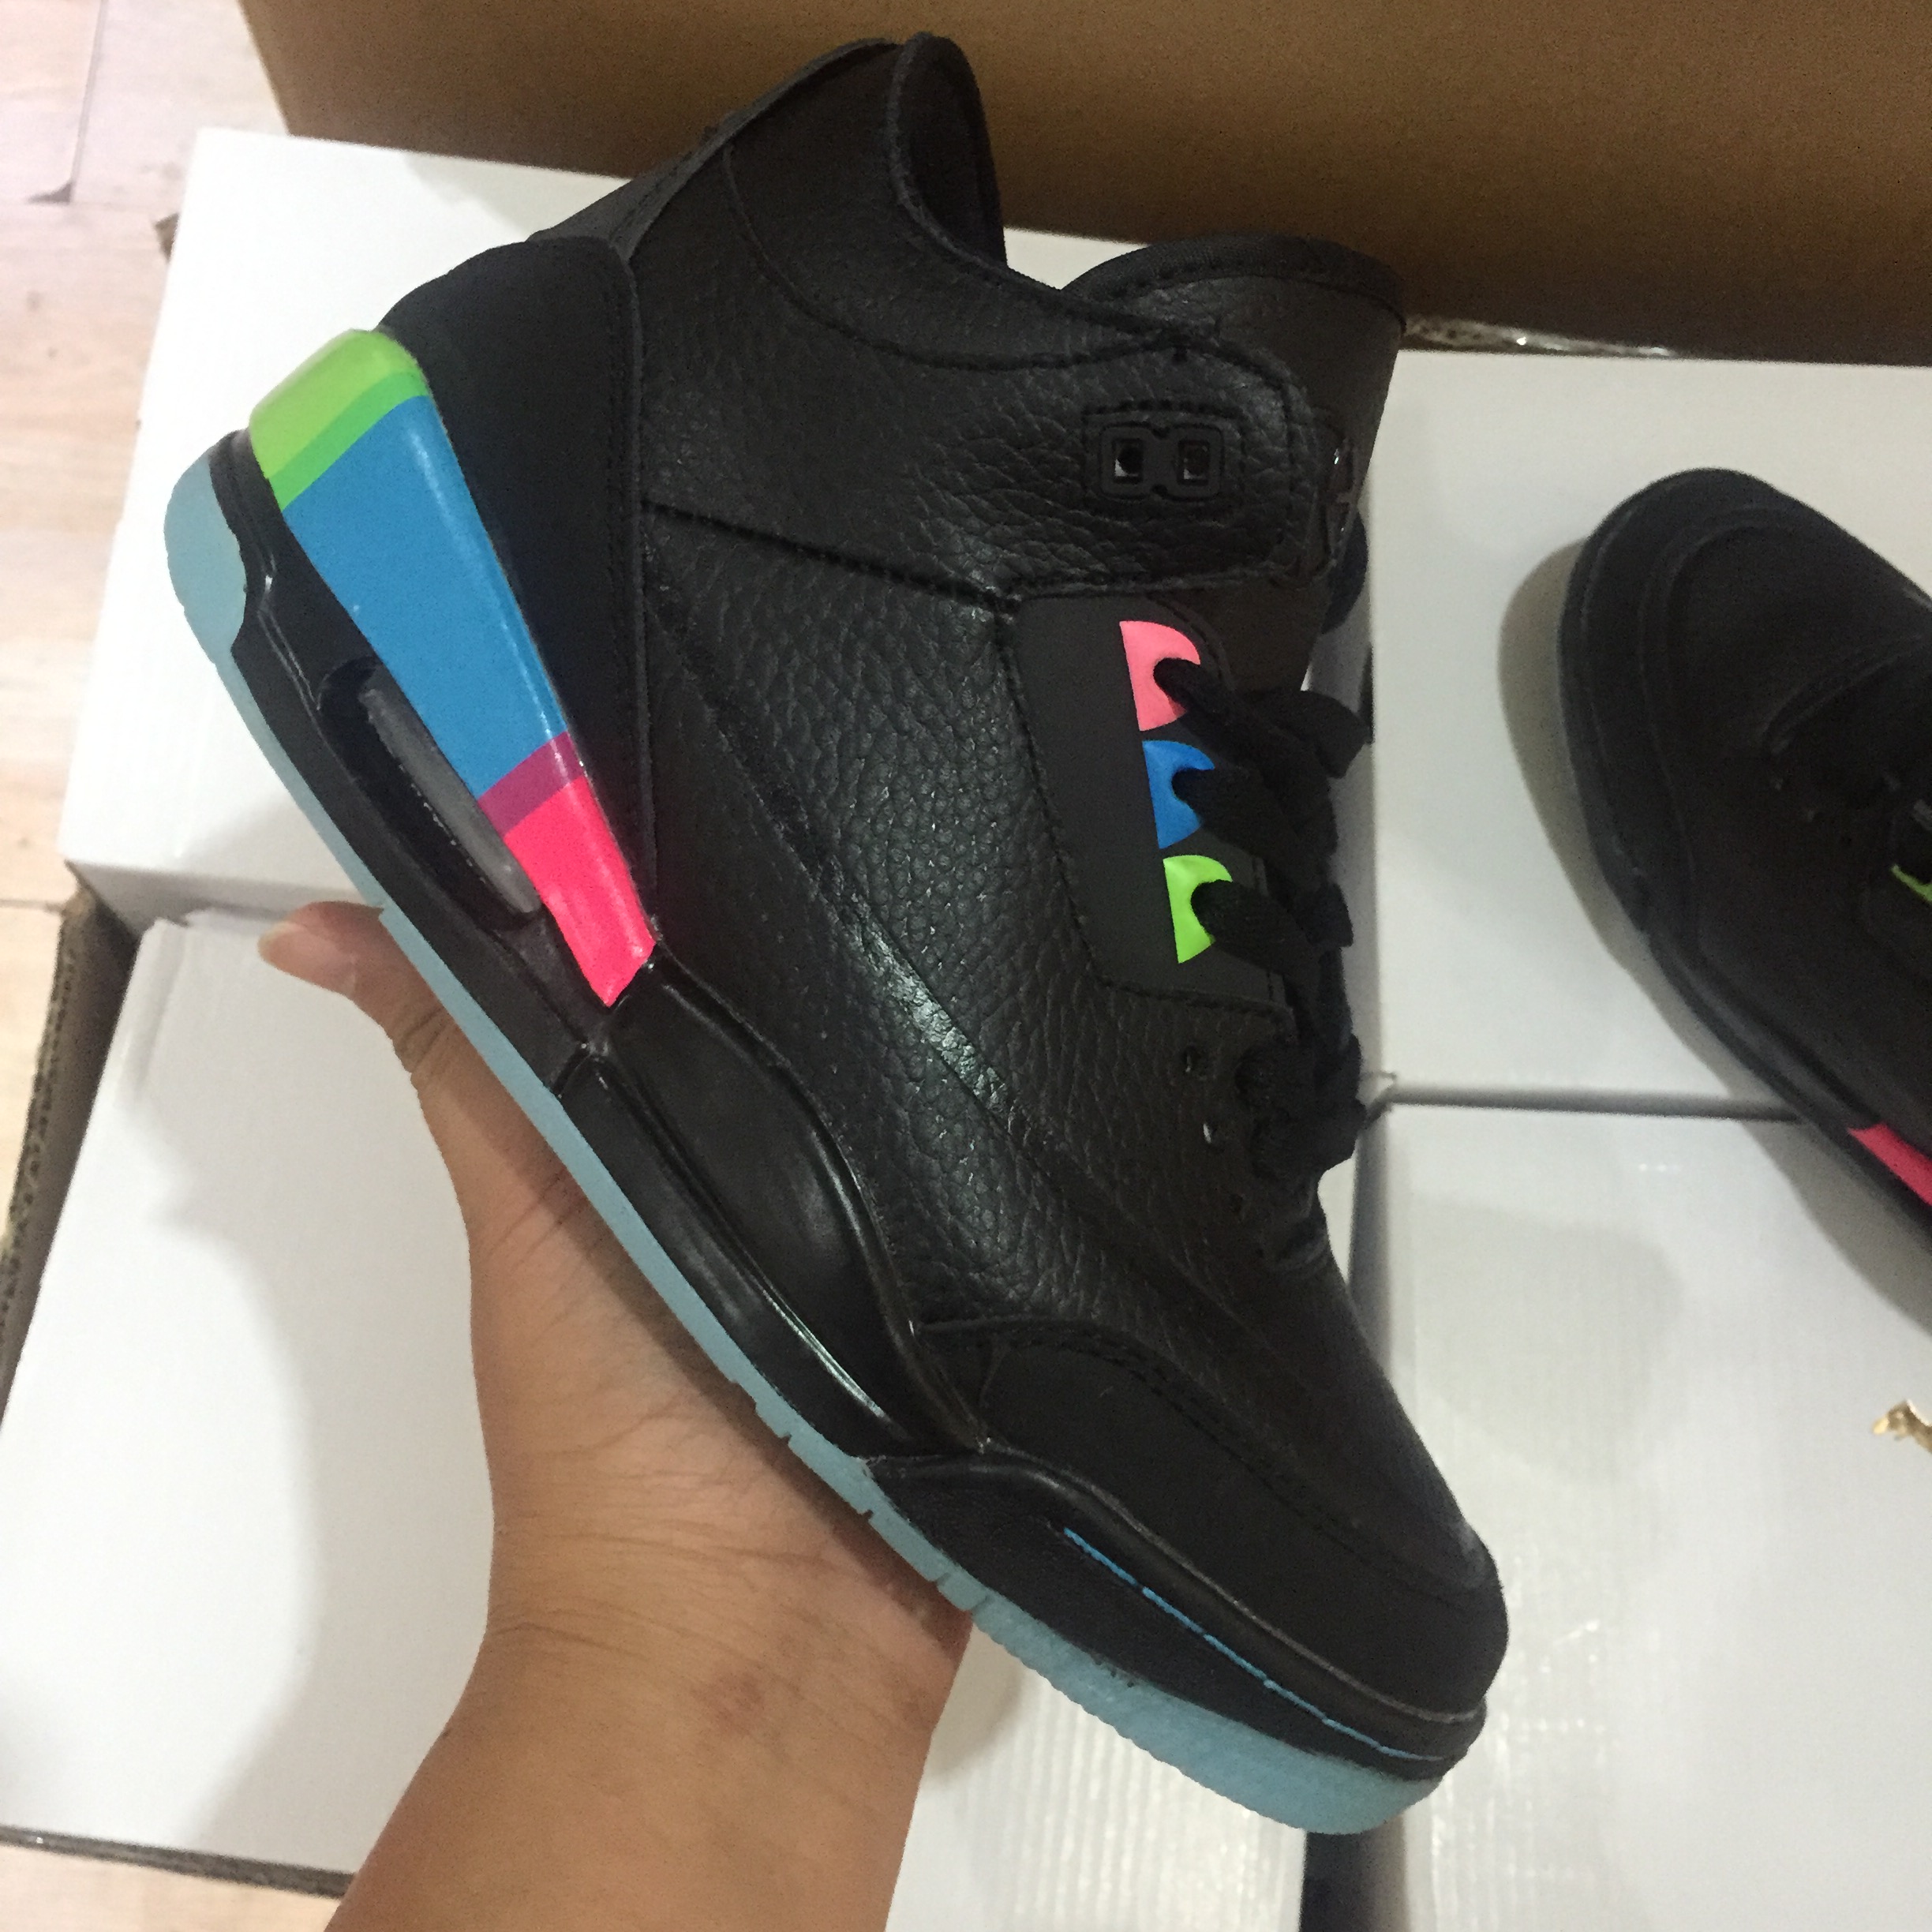 New Air Jordan 3 Black Rianbow Shoes